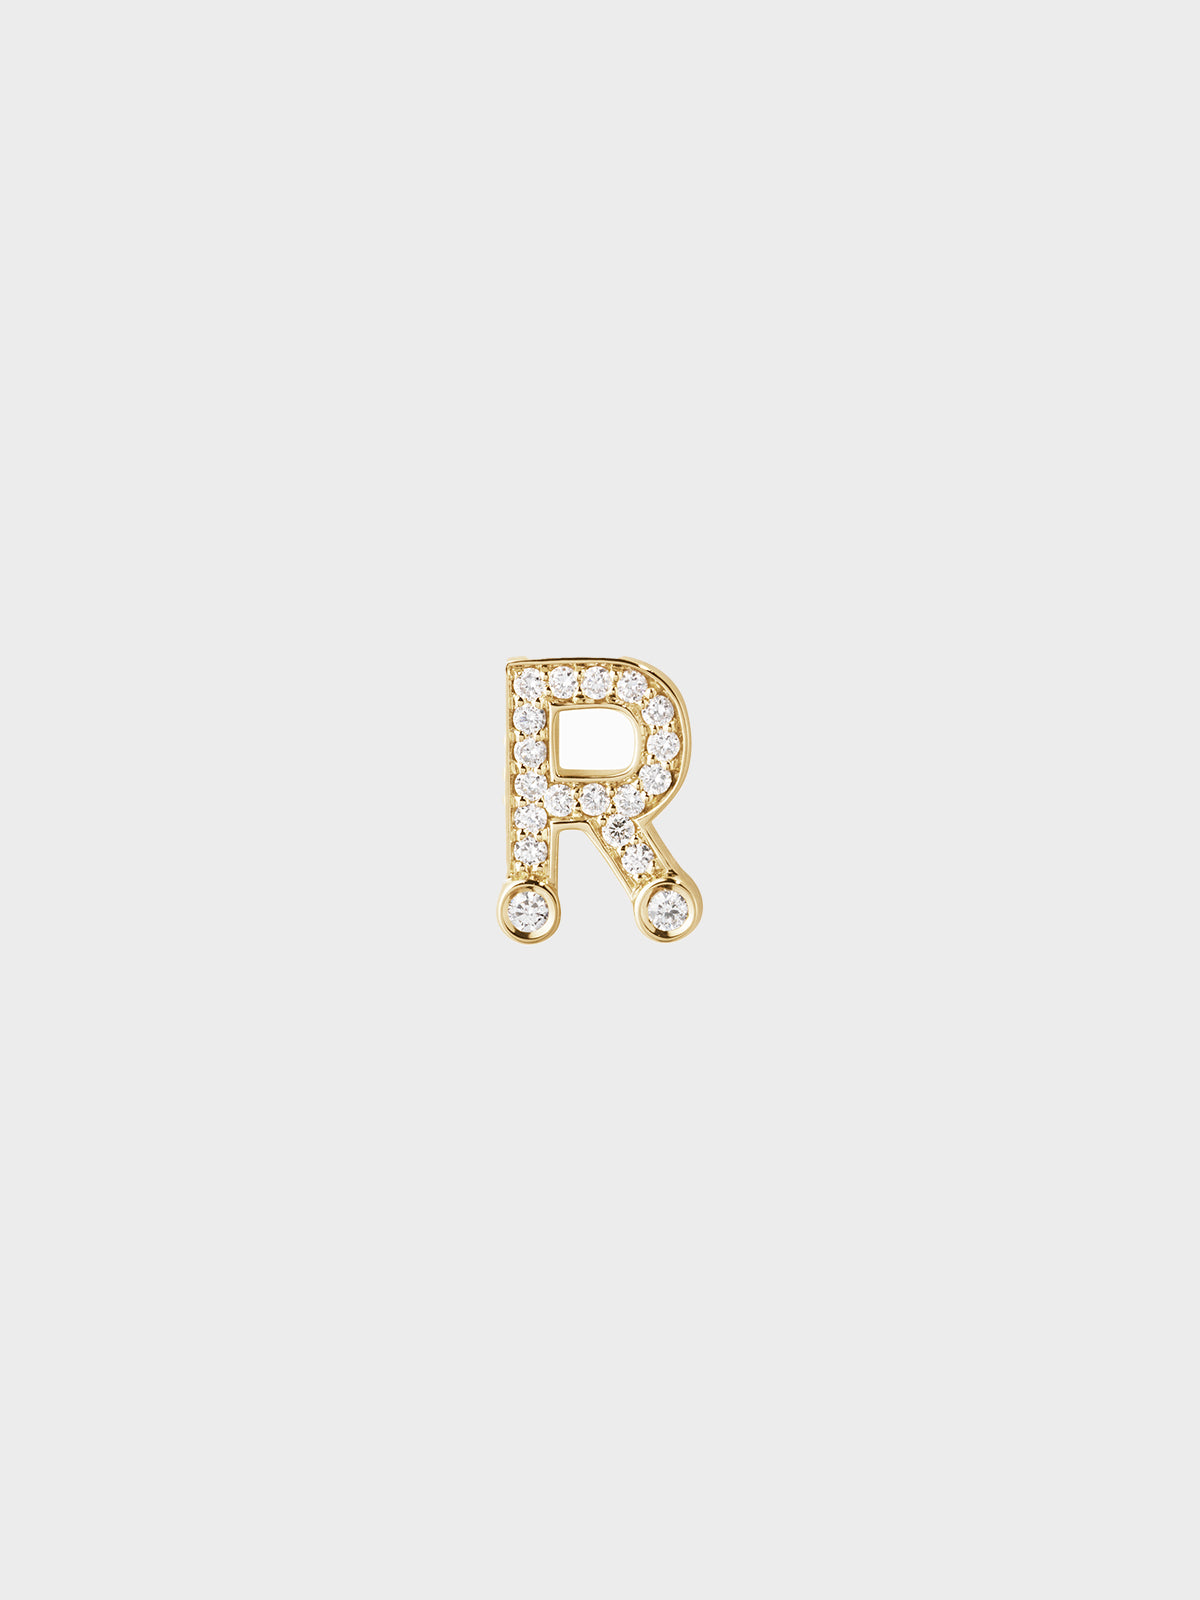 Sophie Bille Brahe - Petite R Earring in 18K Yellow Gold